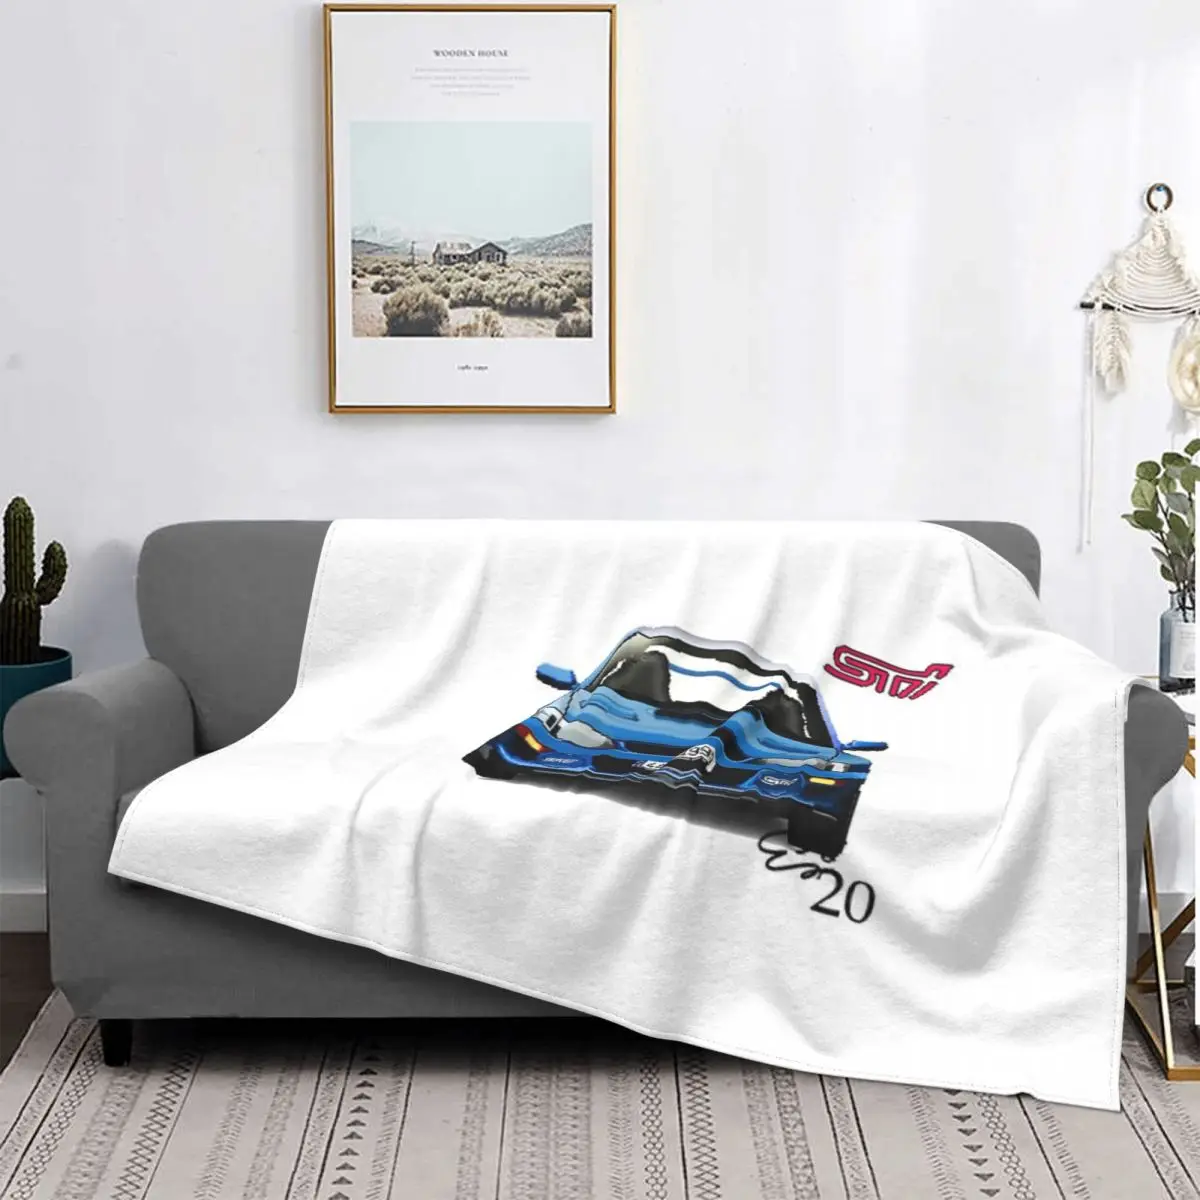 

Manta de Subaru Impreza Wrx Sti 22B '99, colcha para cama, manta de lana a cuadros de Anime, manta para cama